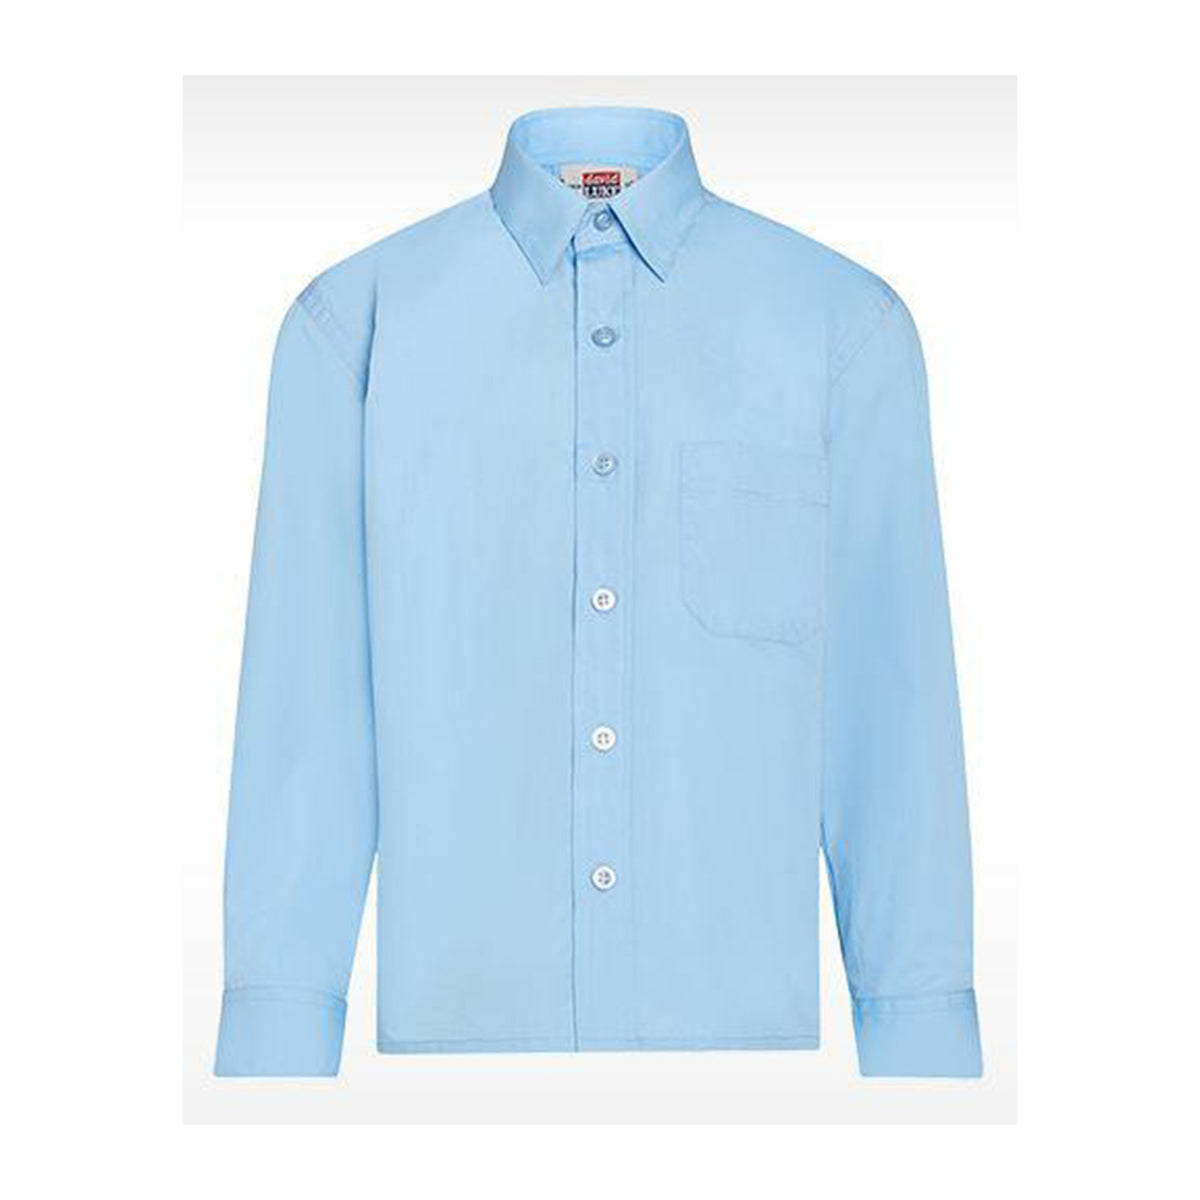 Boys Long Sleeve Shirt (Twin Pack): Blue